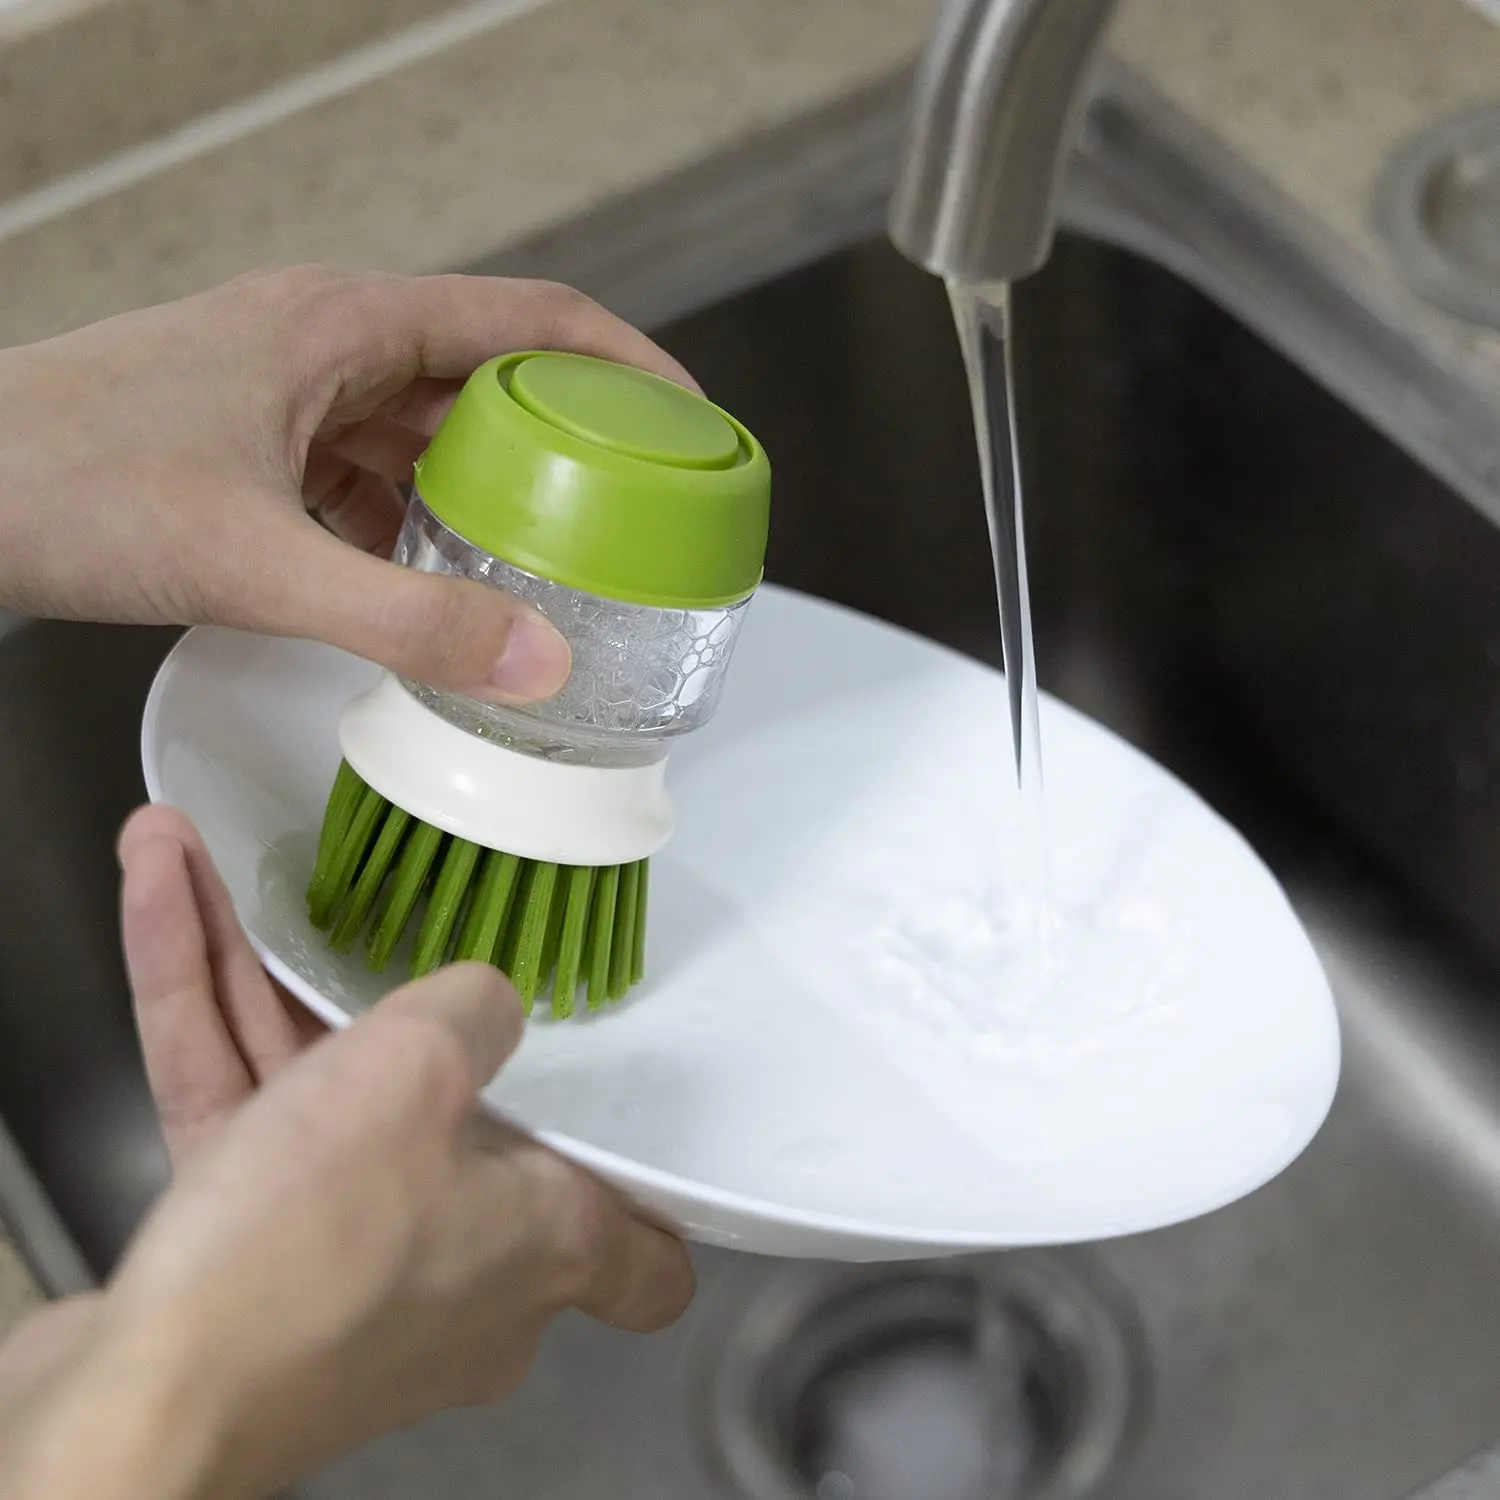 Kitchen soap dispenser palm brush │ Dish sponge with soap dispenser